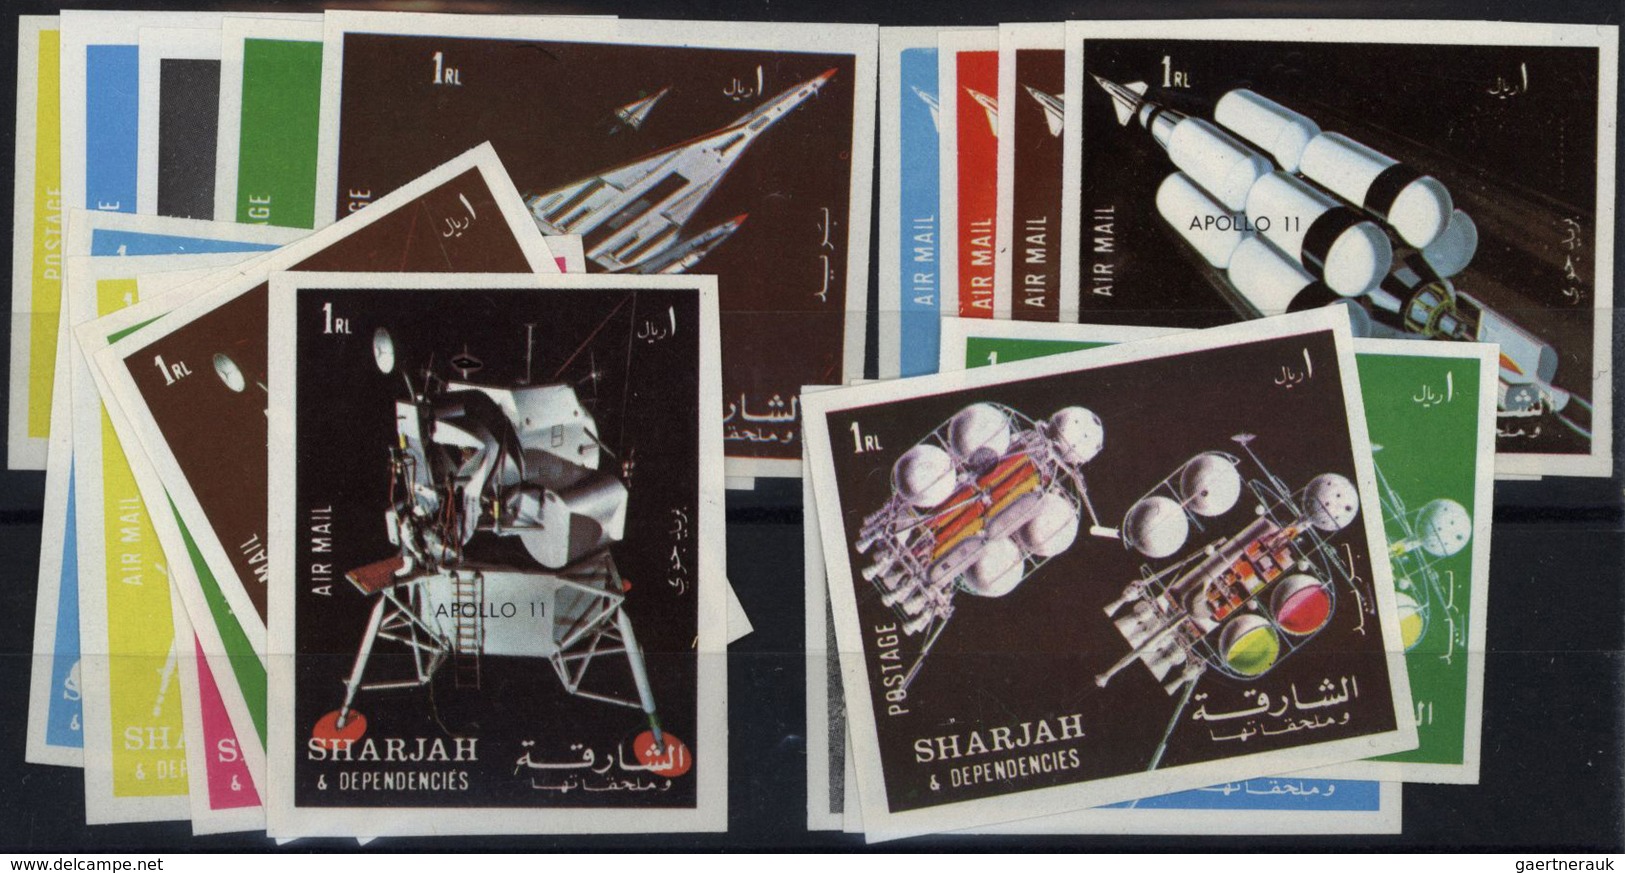 Asien: 1965/1995 (ca.), ARAB STATES, balance in several albums/loose material, comprising Sharjah, S